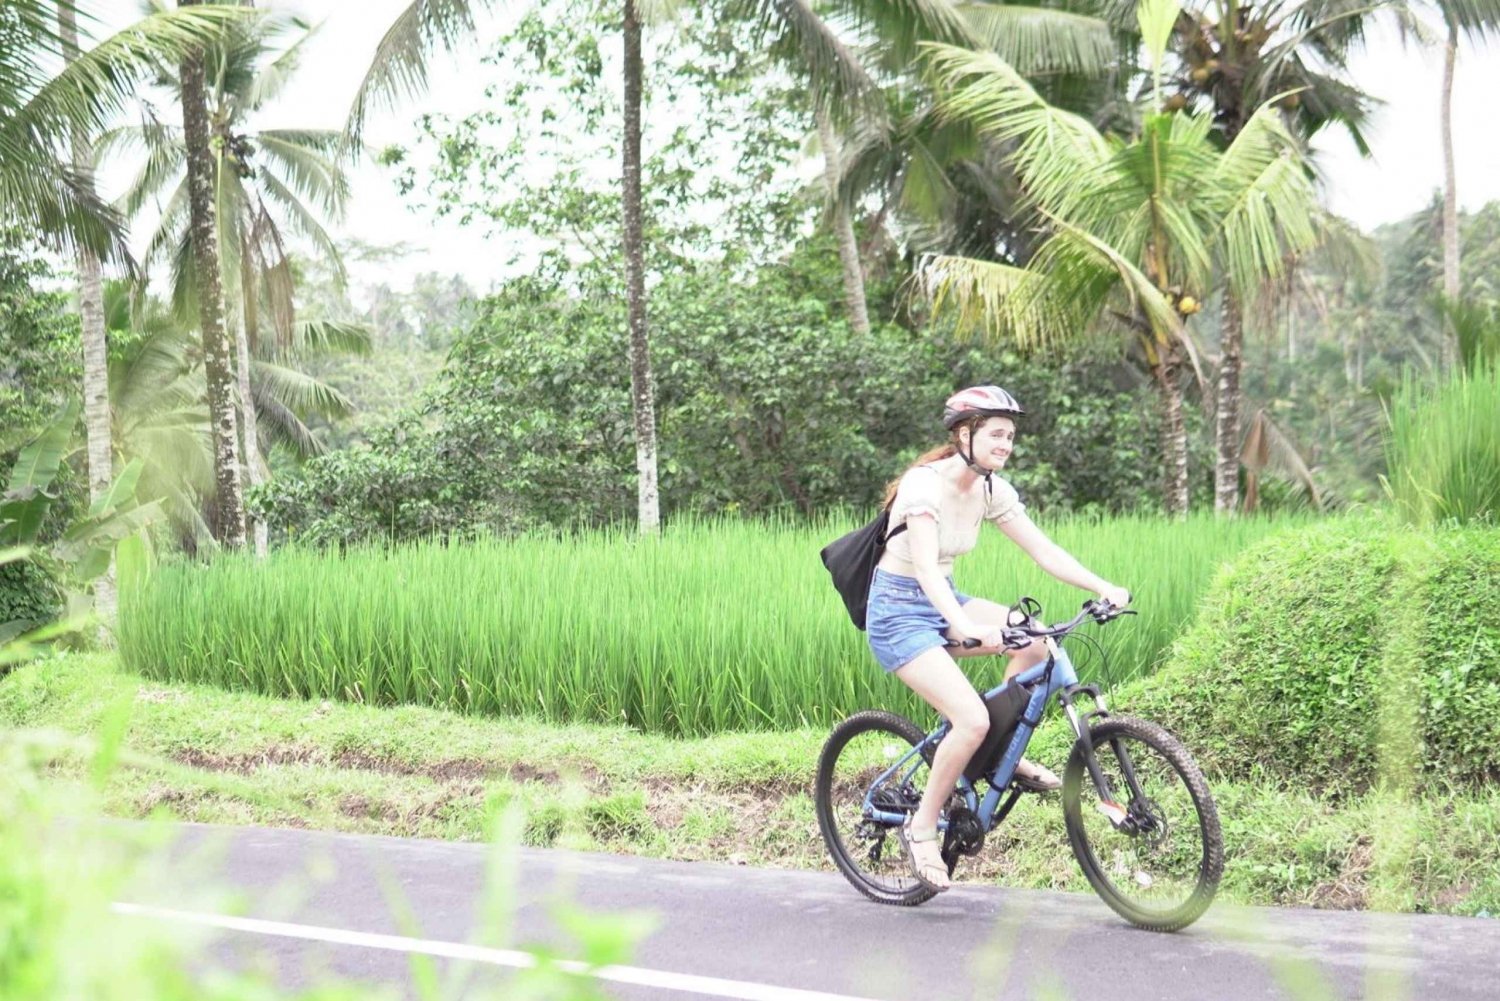 E-Bike: Tour en Bicicleta por la Terraza de Arroz de Ubud y Visita al Templo Local